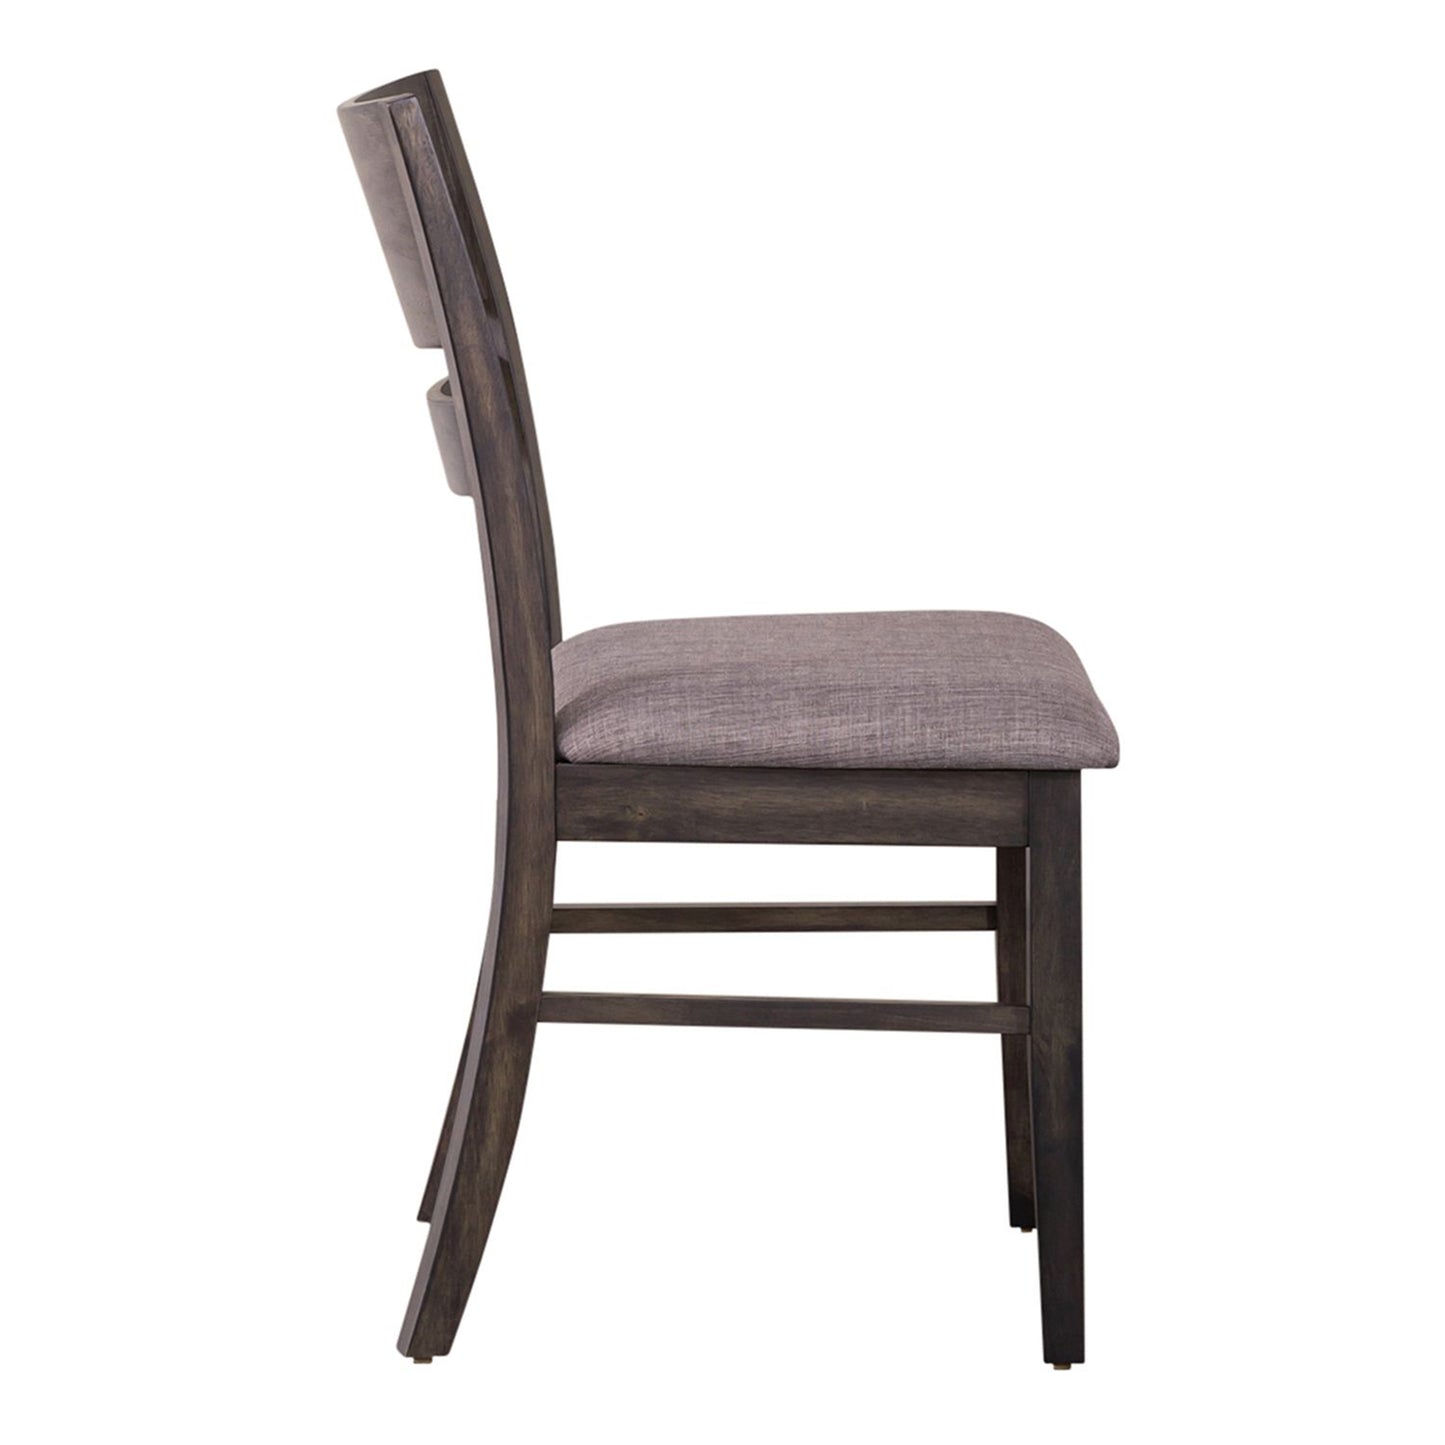 Almeta Solid Wood Slat Back Upholstered Dining Chairs, Set of 2 -Dark Umber Brown Finish